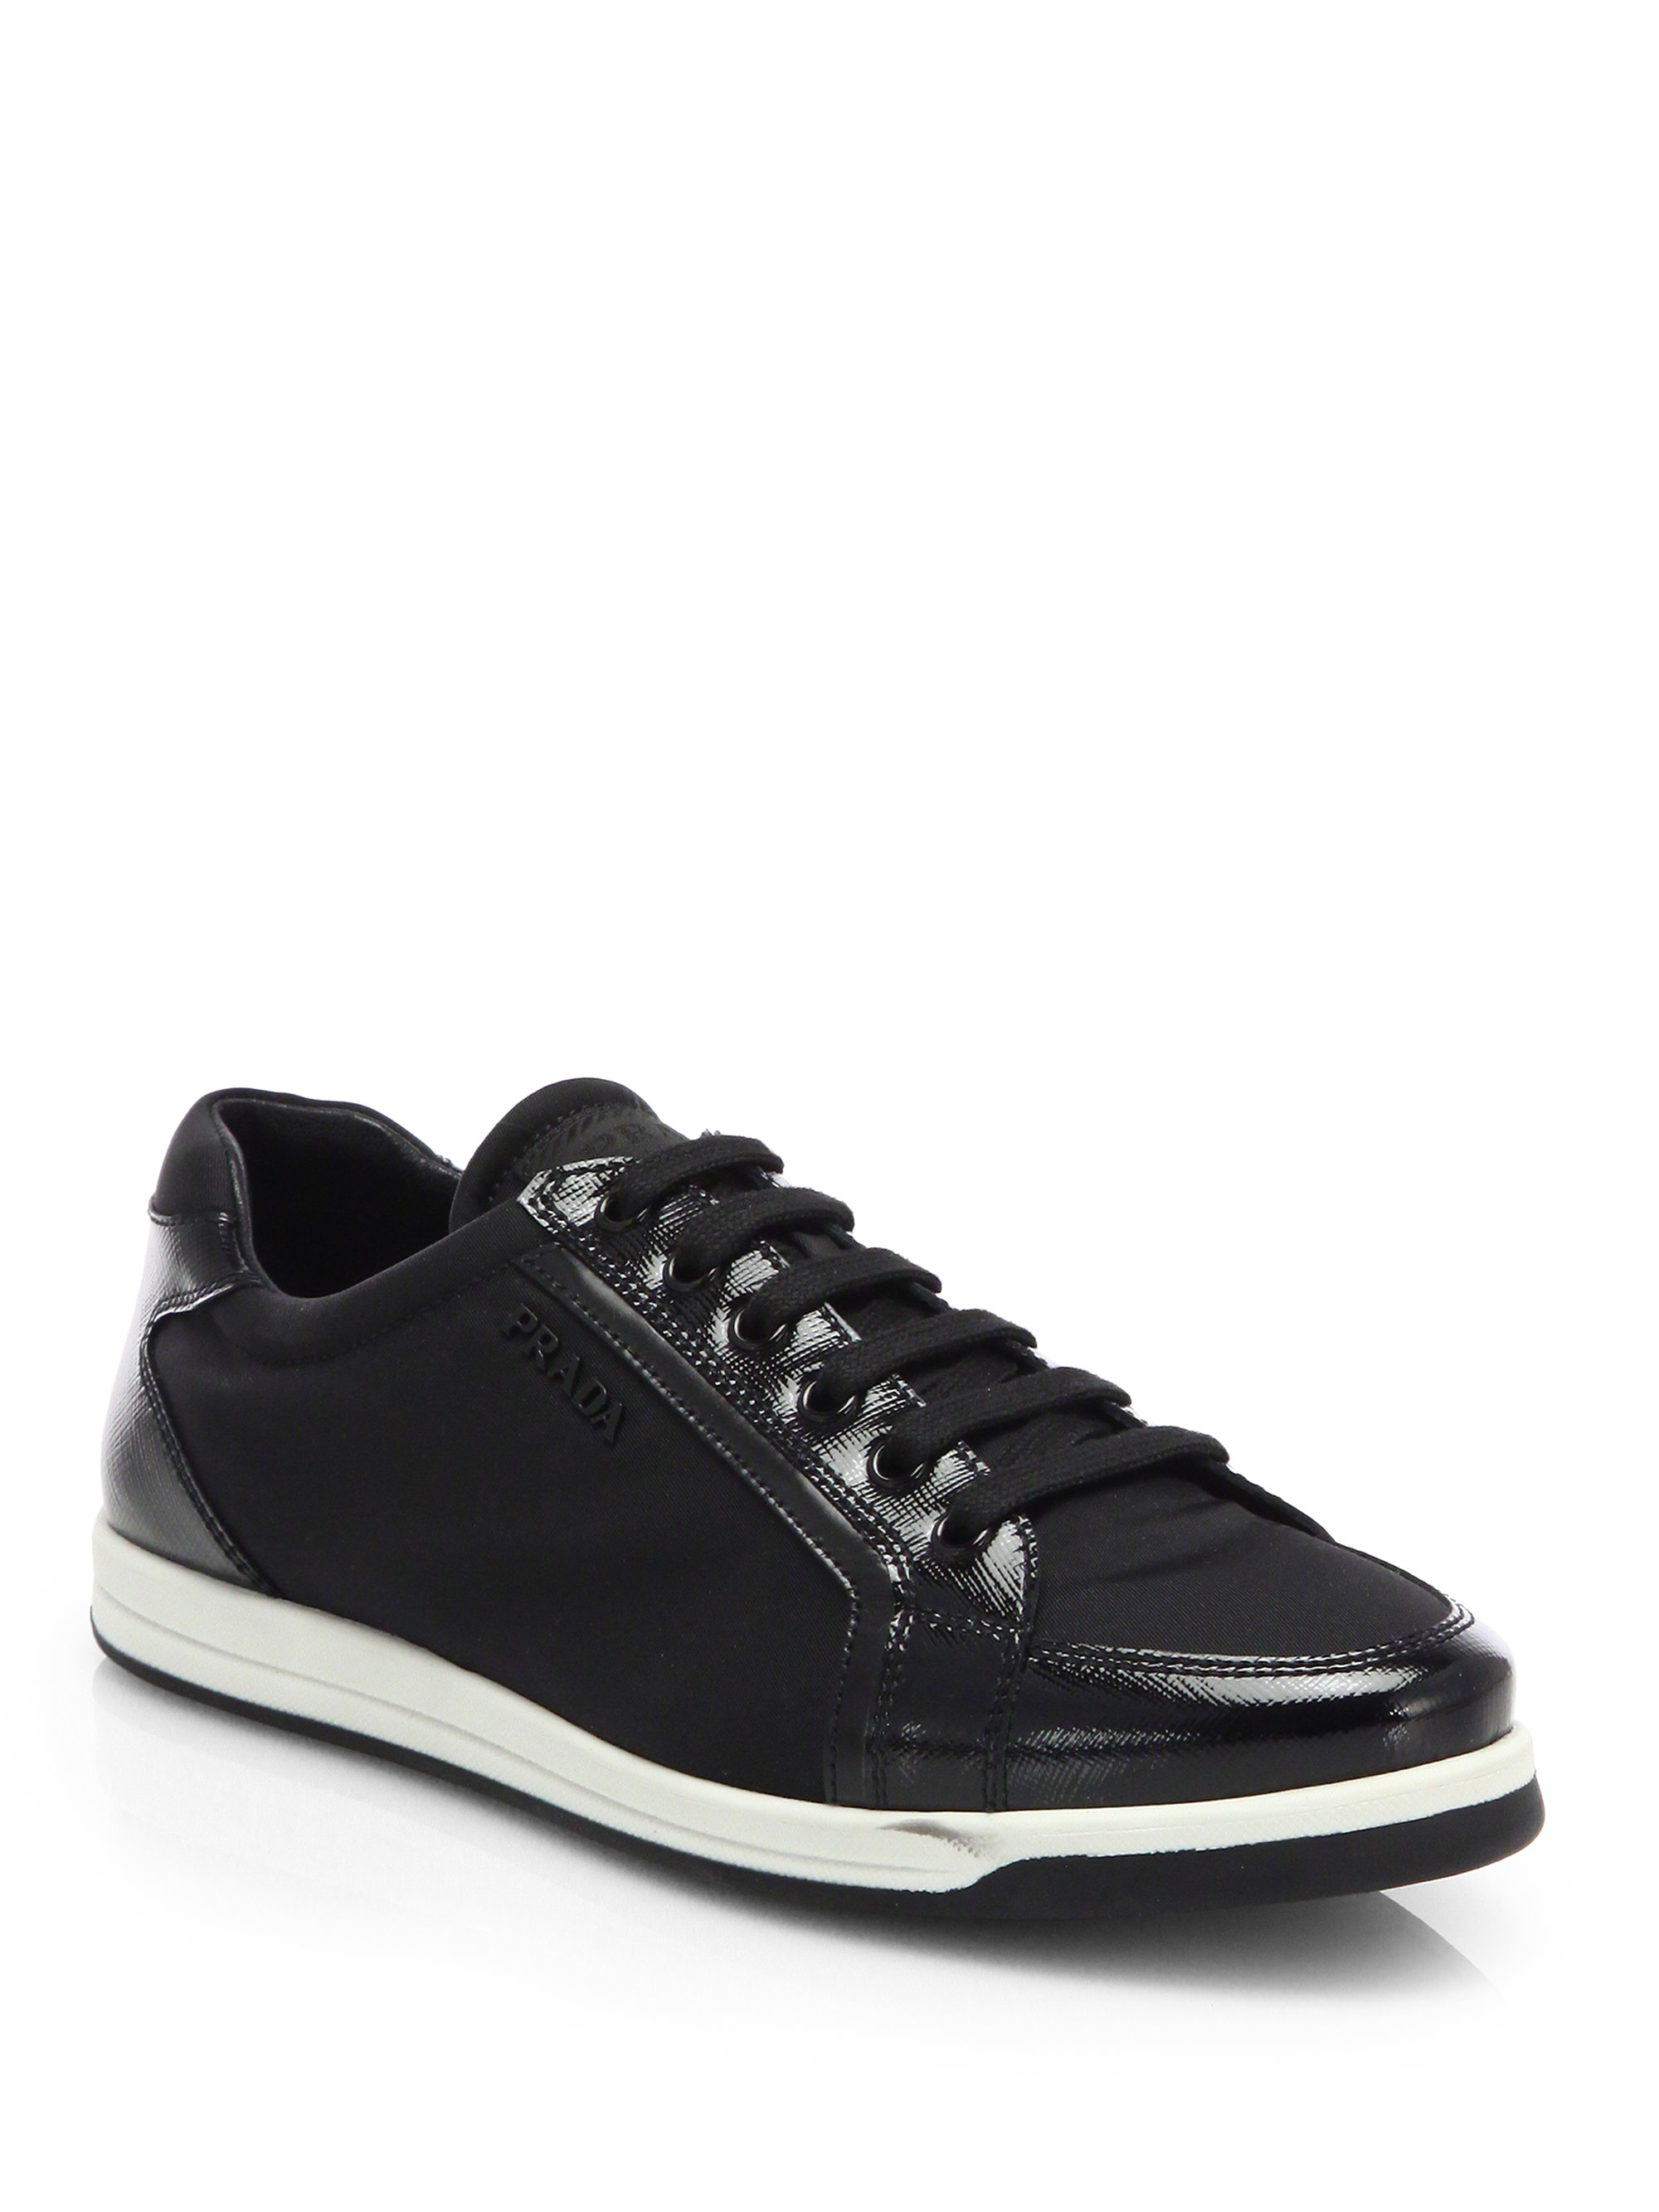 Prada Saffiano Patent Leather Sneakers in Black | Lyst